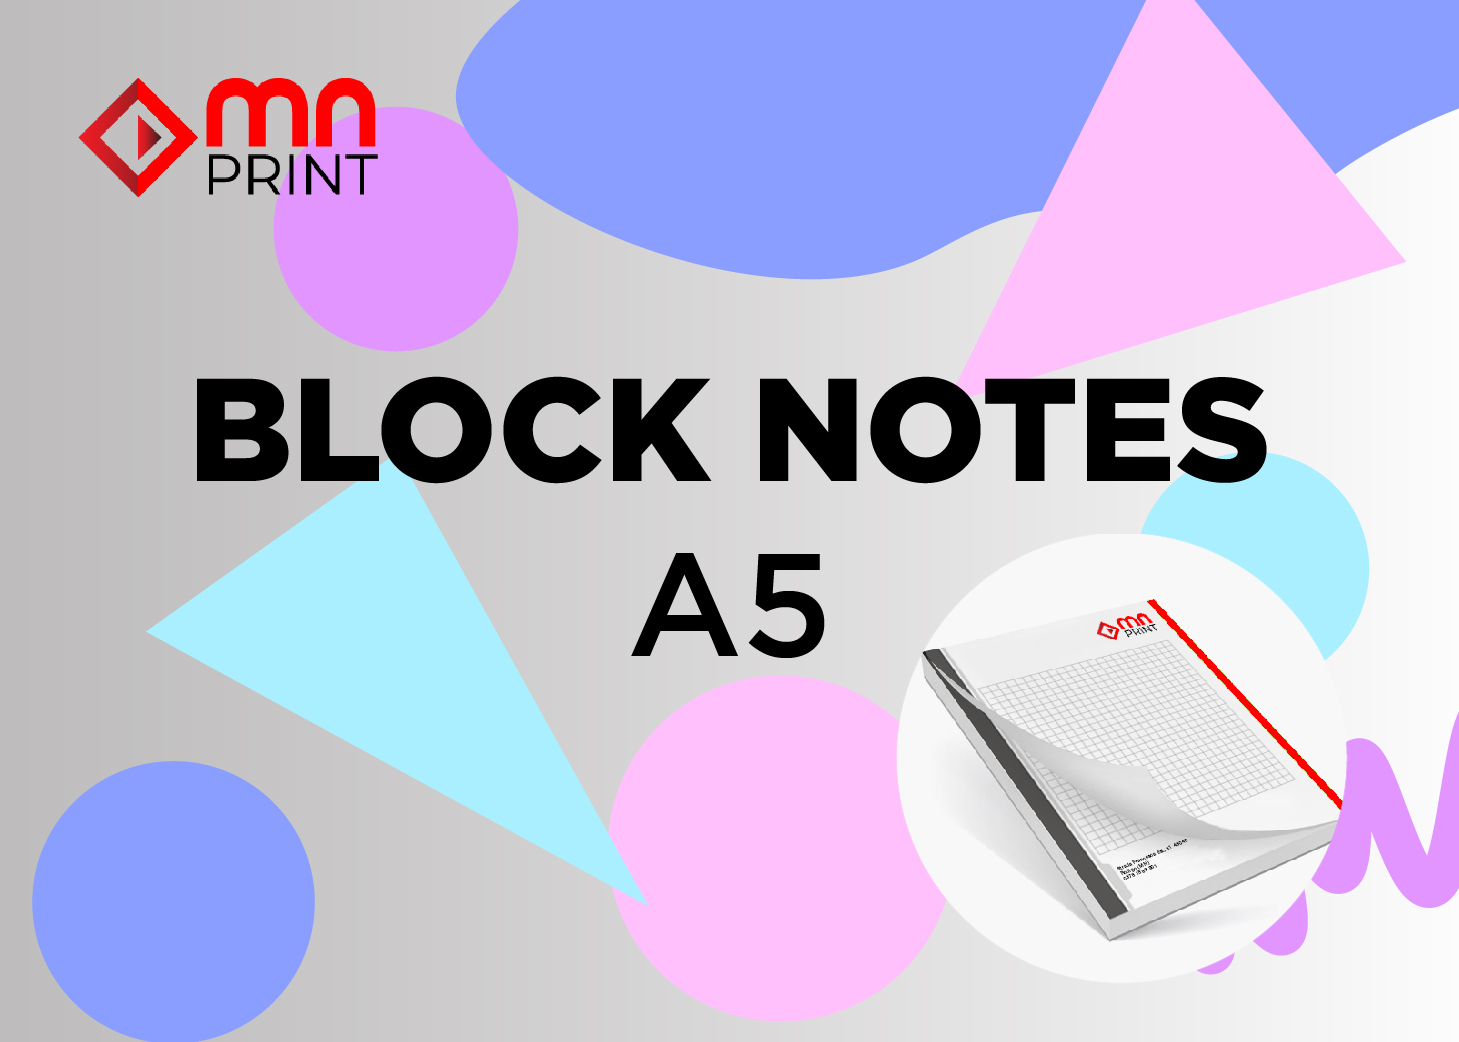 Pryma - Block notes A5 70FF 5M 15x21Cm - CZ Store